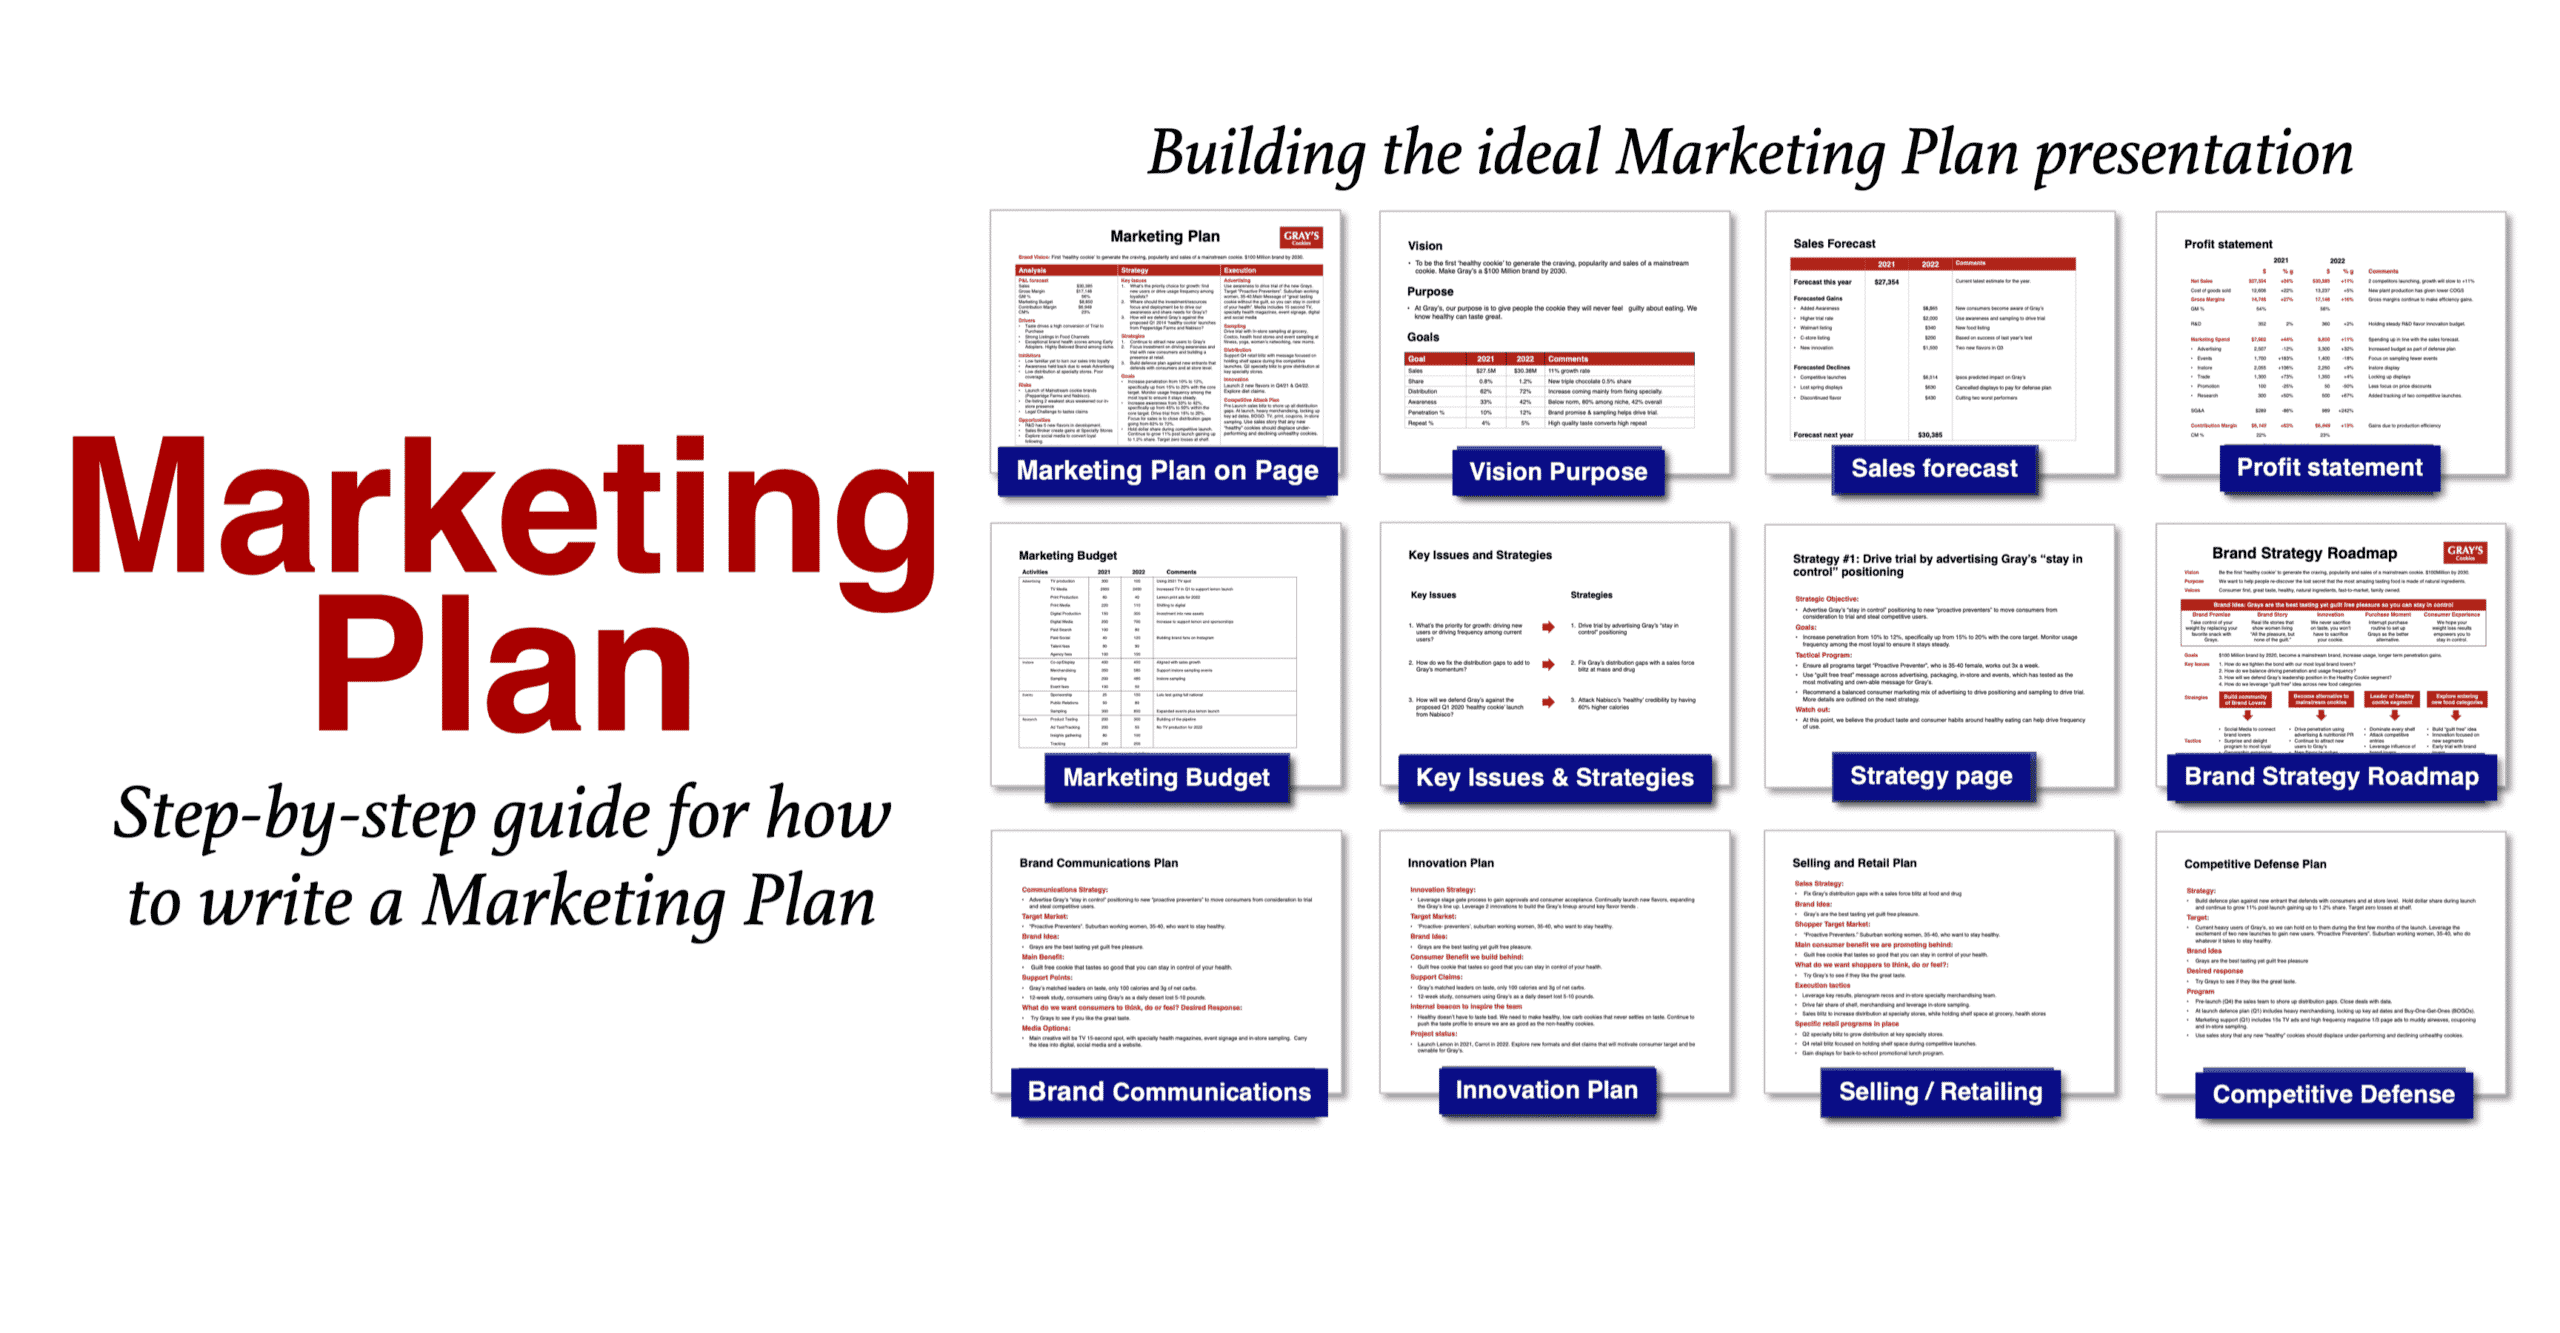 Building the ideal marketing plan presentation